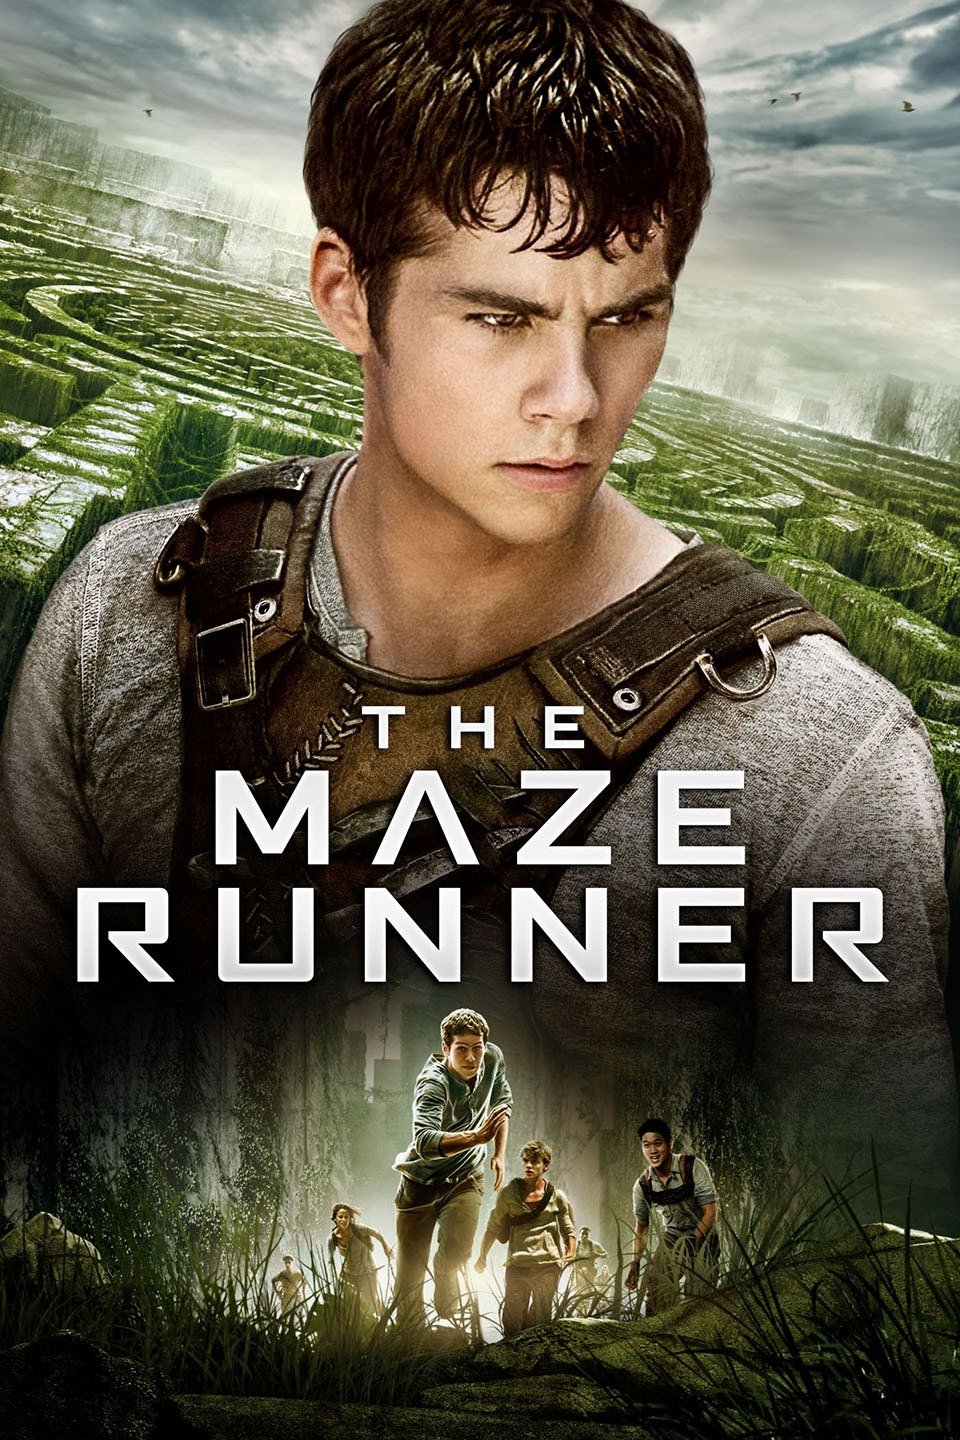 [MINI Super-HQ] The Maze Runner (2014) เมซ รันเนอร์ วงกตมฤตยู [1080p] [พากย์ไทย DTS + อังกฤษ DTS] [BrRip.DTS-TH.x264] [บรรยายไทย + อังกฤษ] [เสียงไทย + ซับไทย MASTER] [ONE2UP]